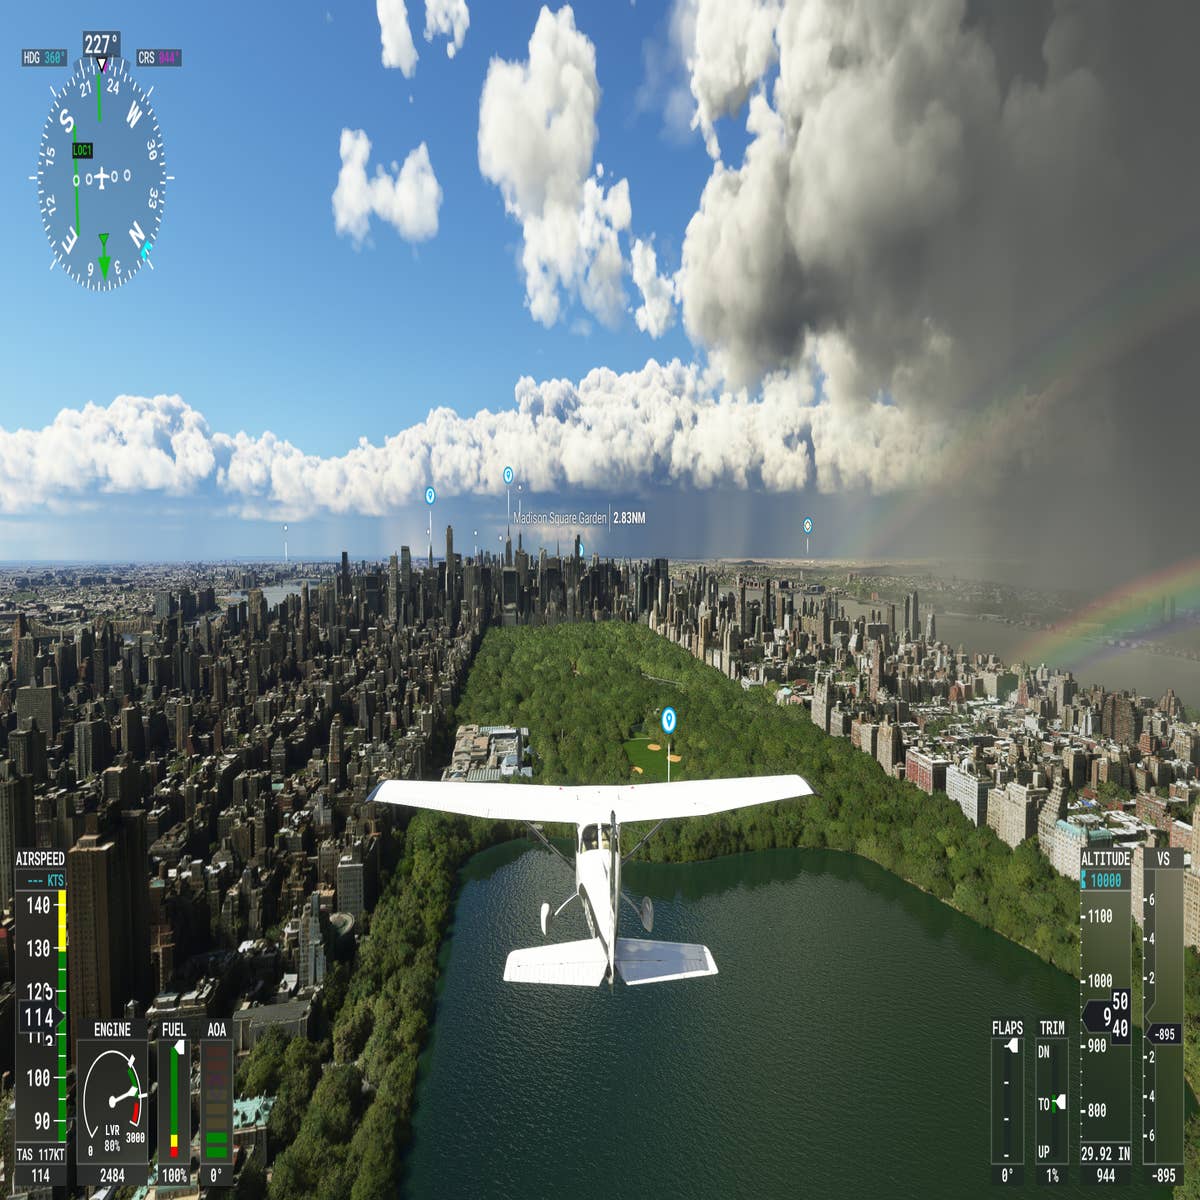 Microsoft Flight Simulator: World Update XII Takes Us To New